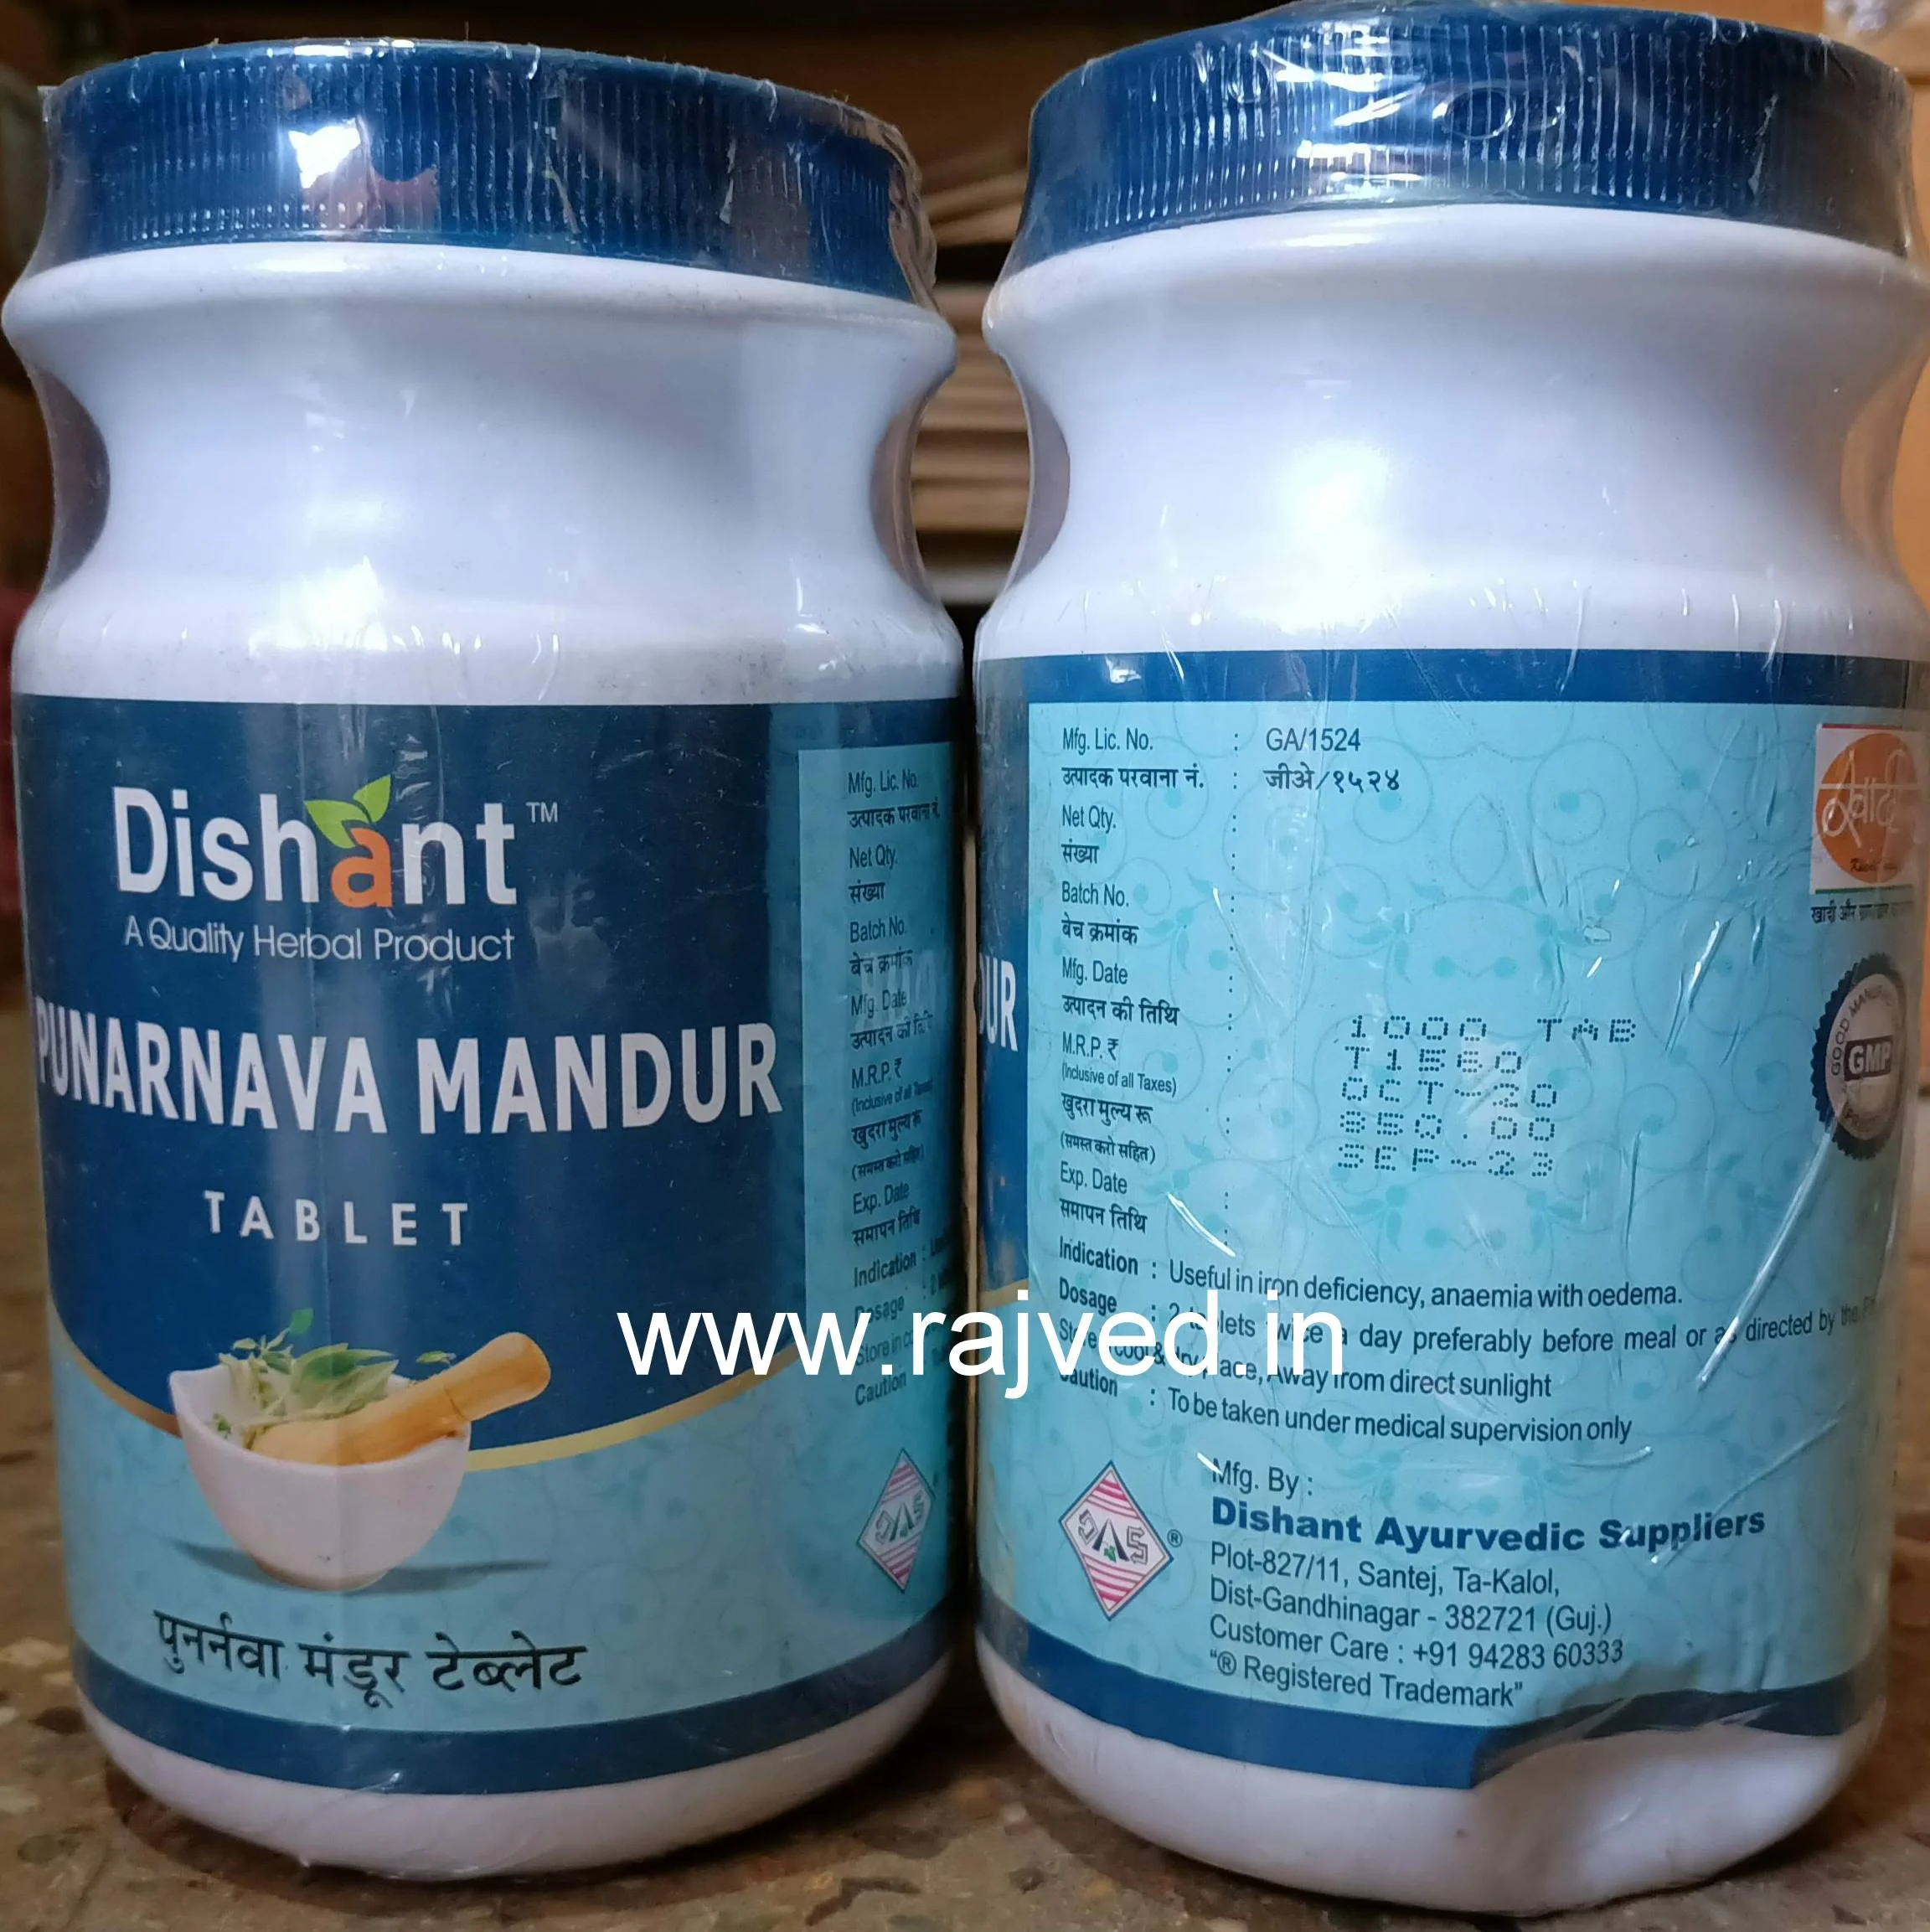 Punarnavadi Mandur Tablets 250 Gm Upto 20% Off Dishant Ayurvedic Suppliers